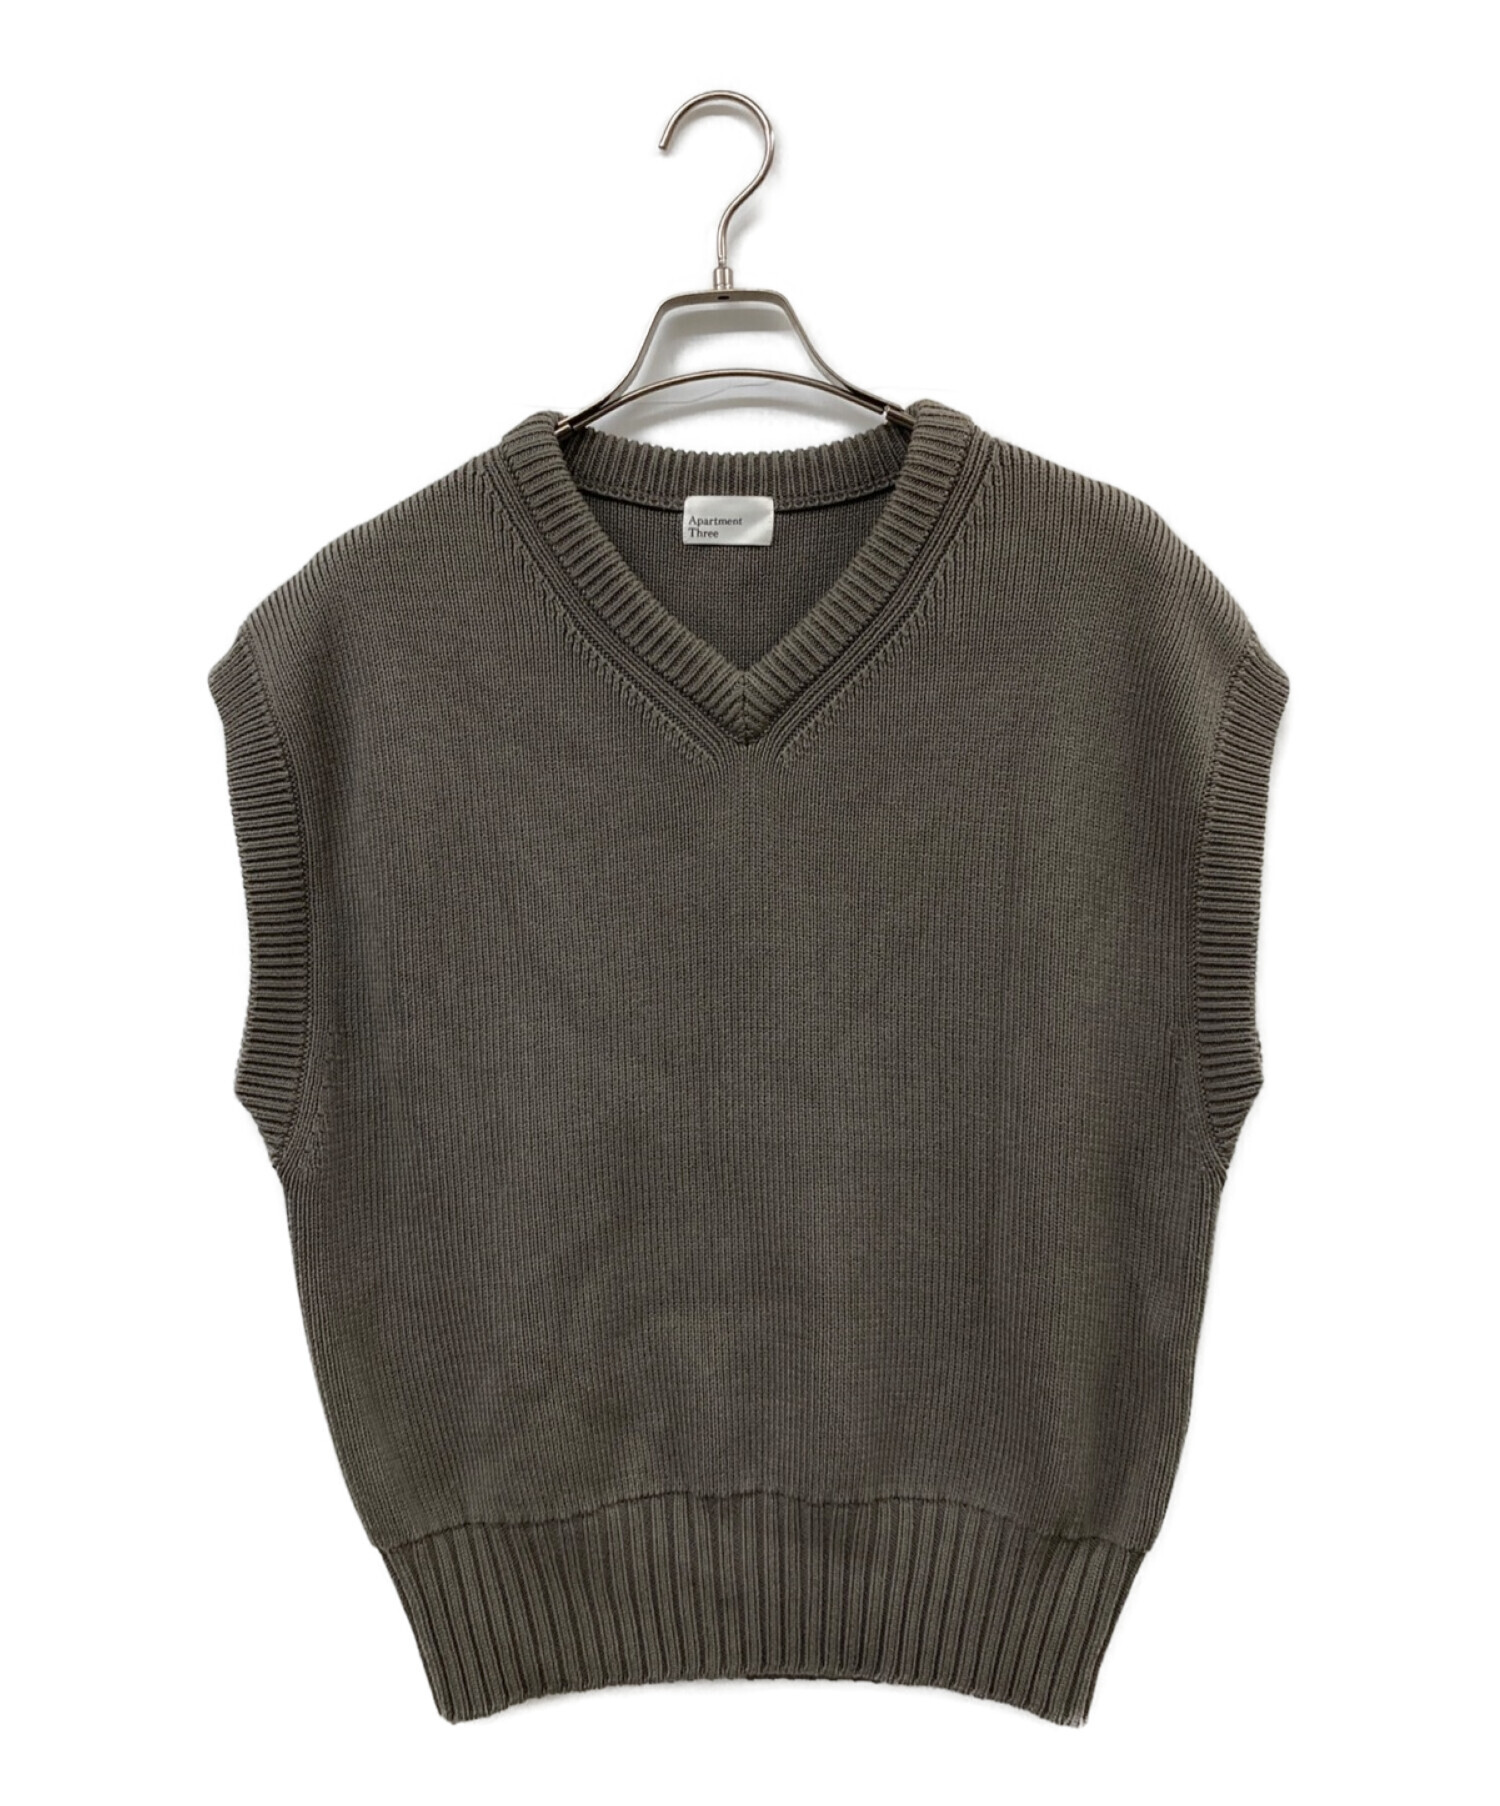 Sweater to Sweater Vest Refashion — Sum of their Stories Craft Blog